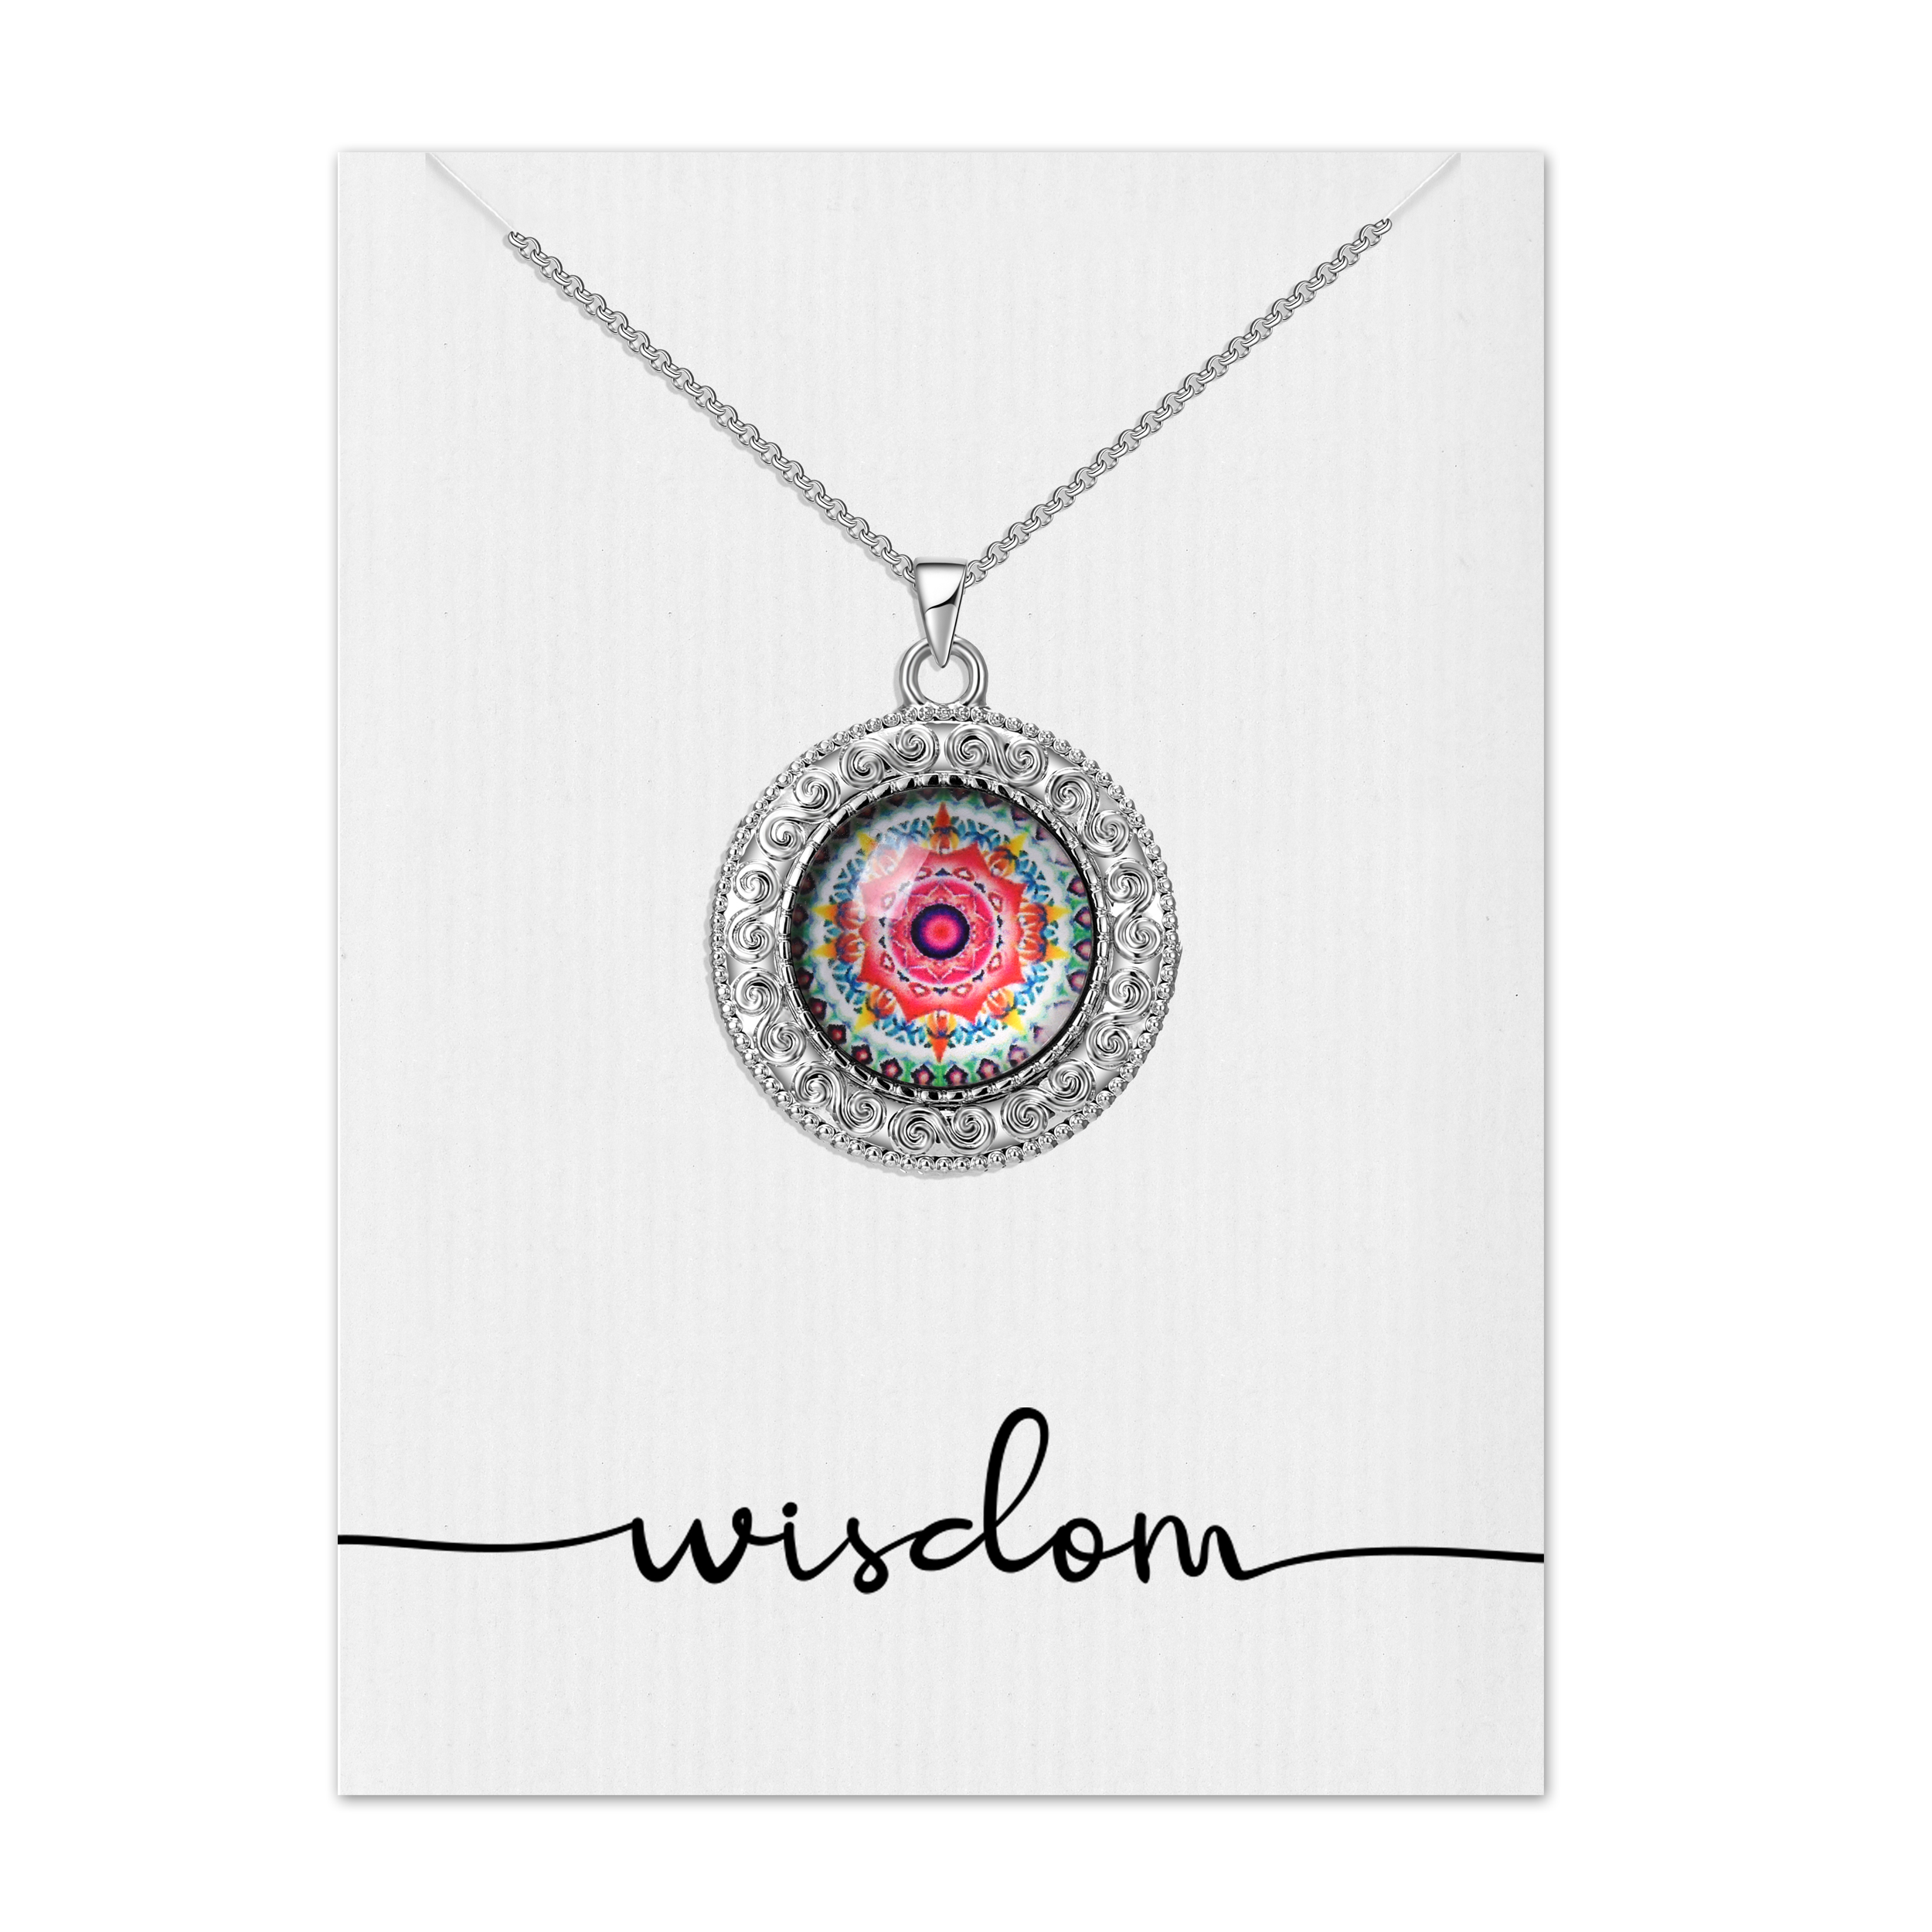 Wisdom Mandala Necklace by Philip Jones Jewellery